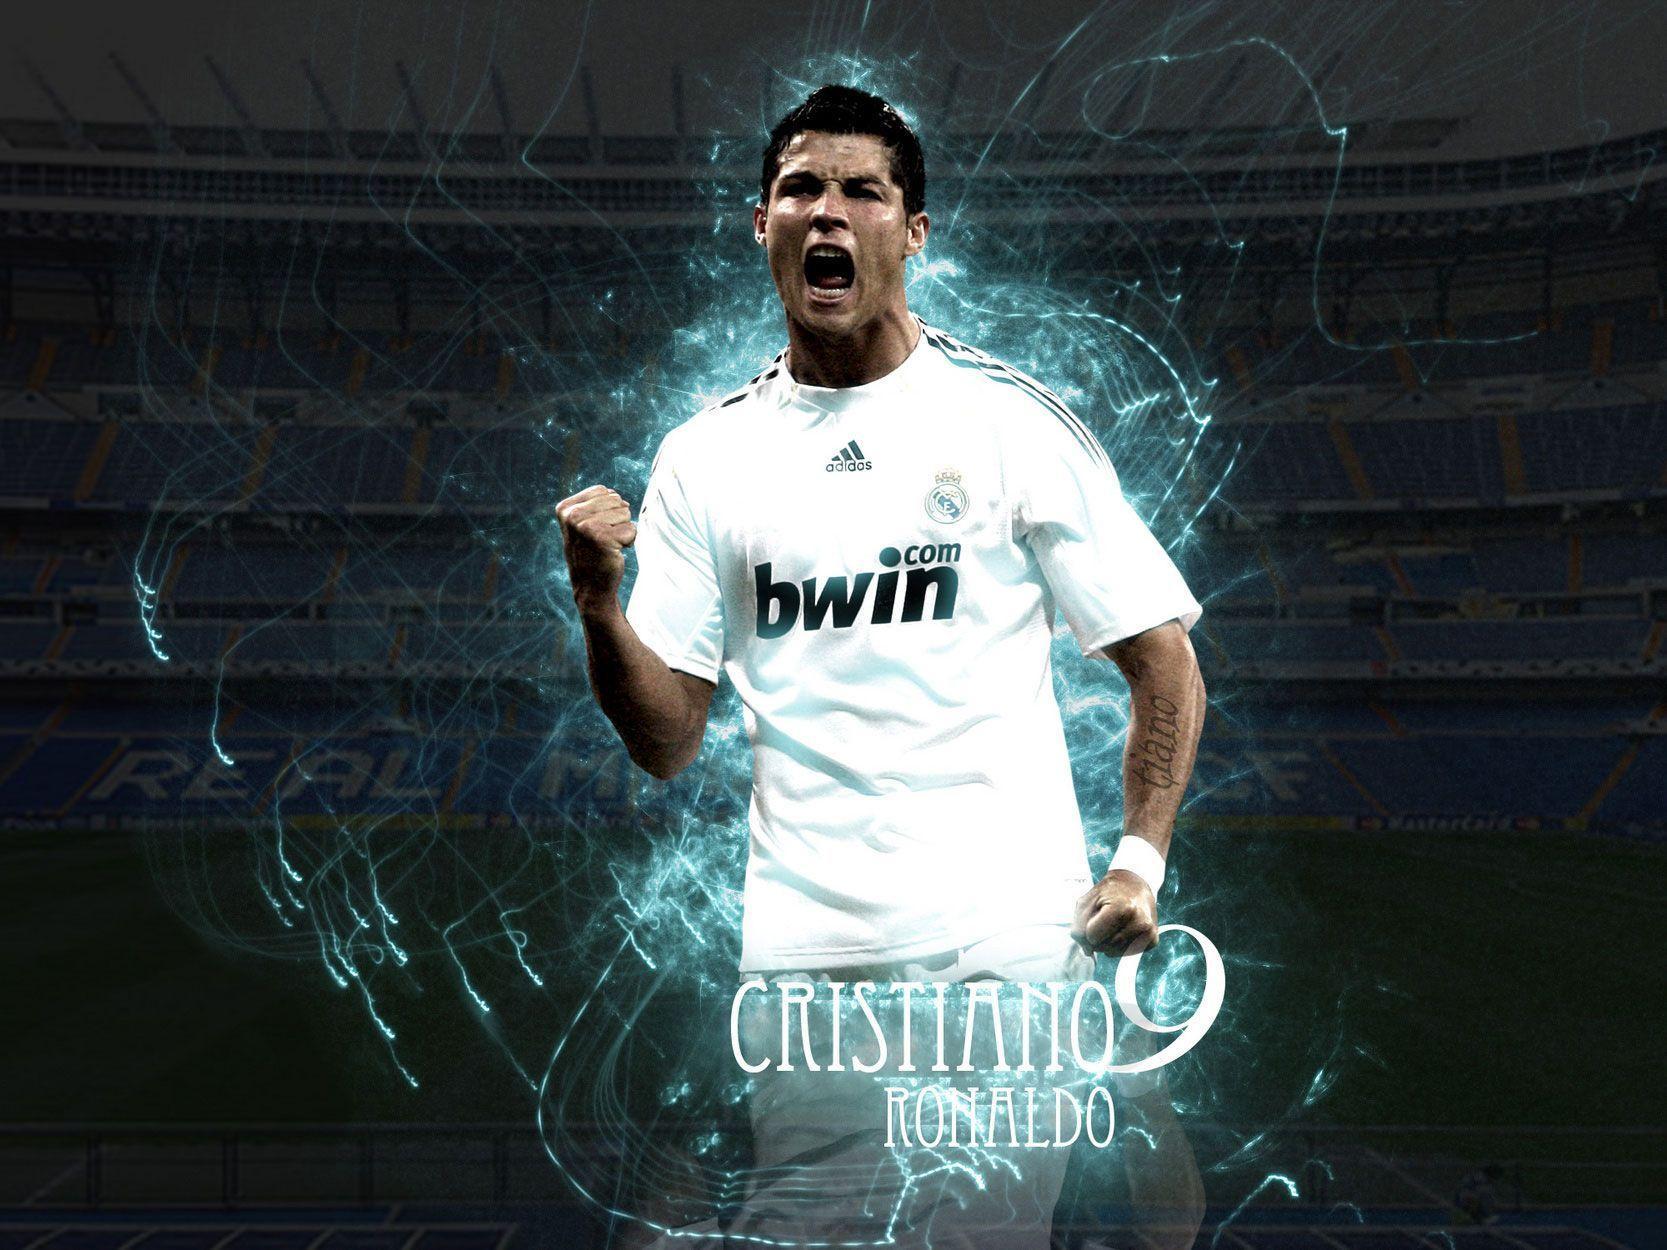 Download Free Cristiano Ronaldo HD Wallpaper 1080p at